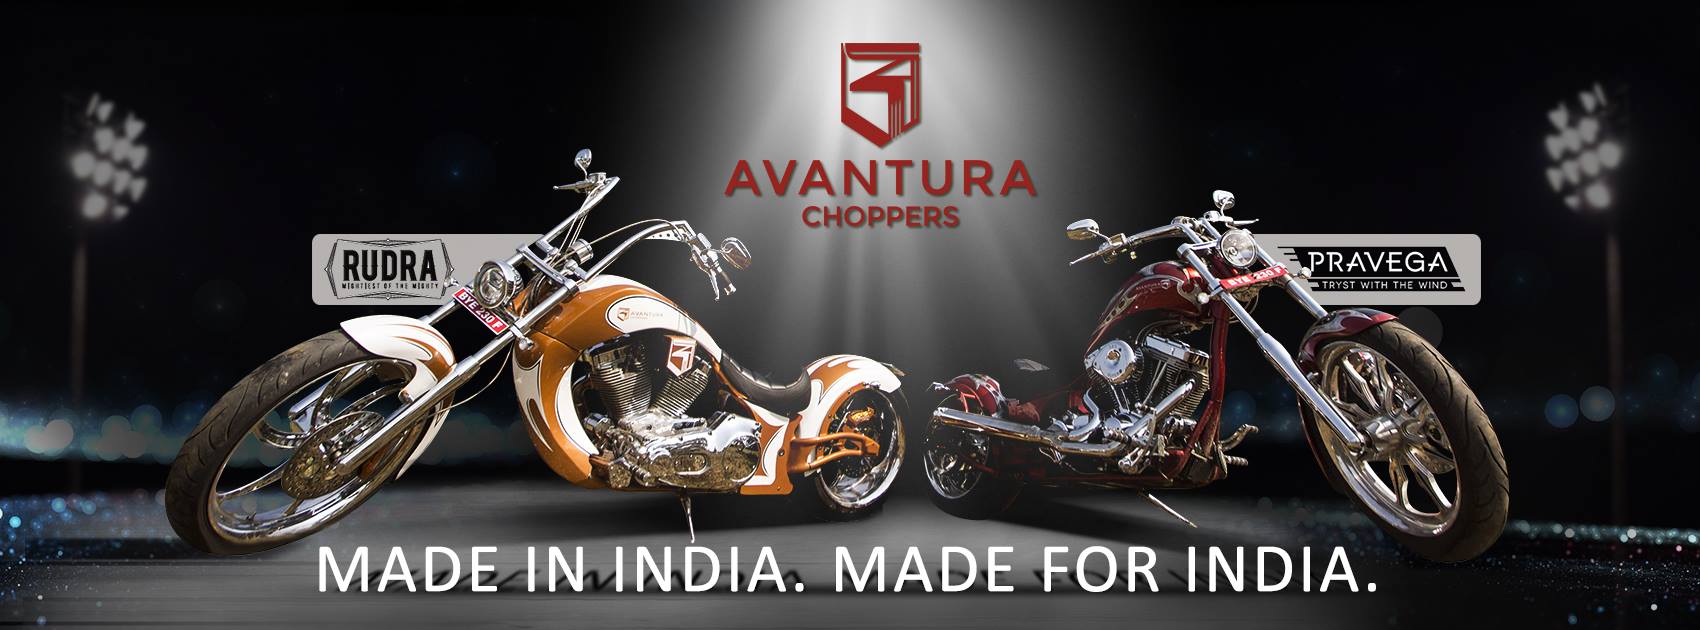 avantura choppers india images